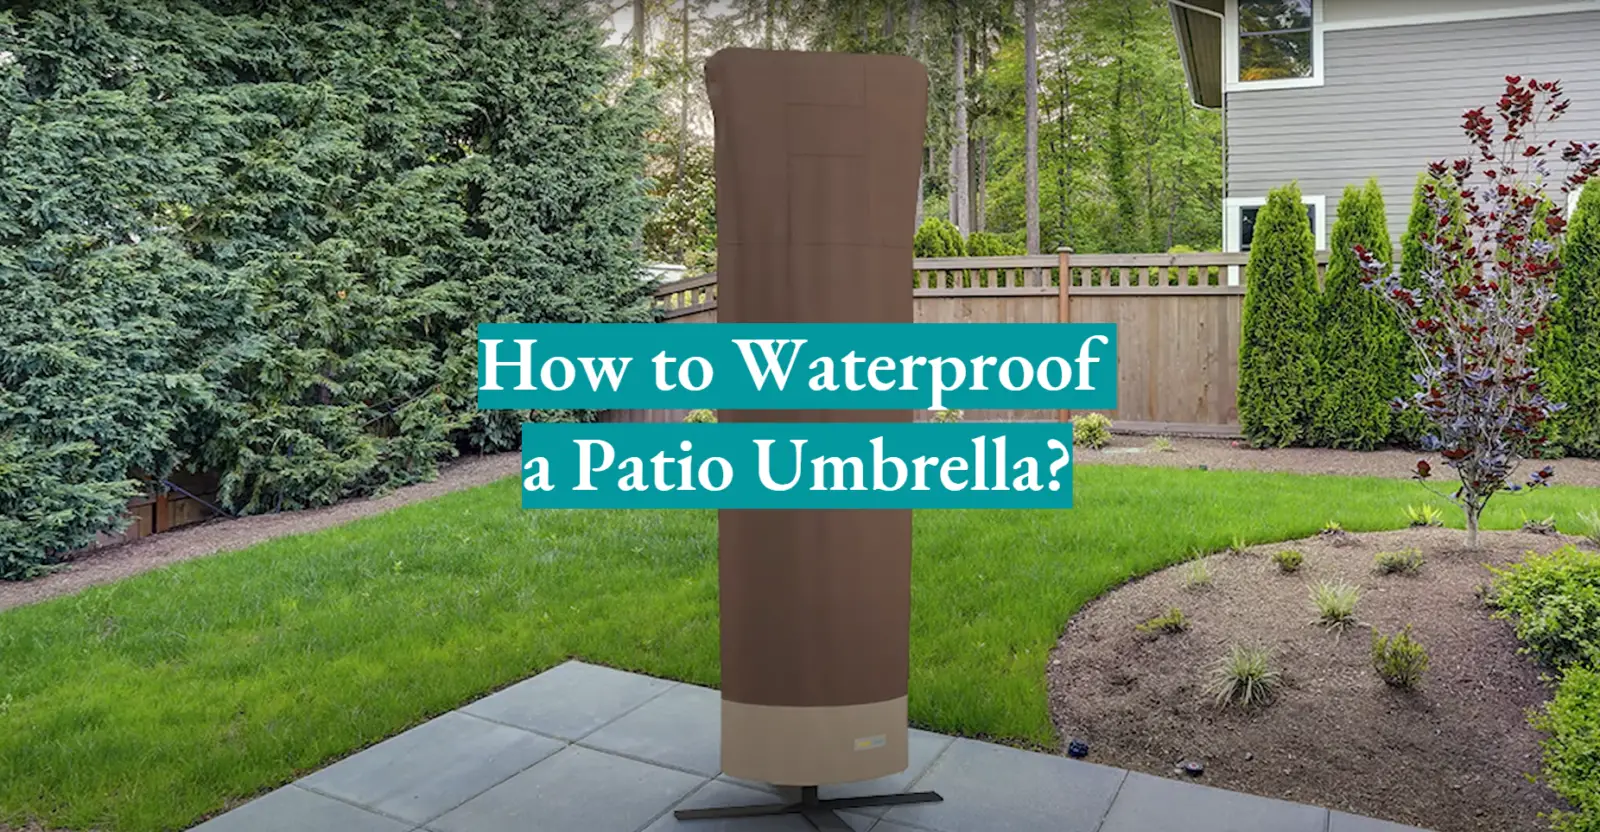 How to Waterproof a Patio Umbrella?